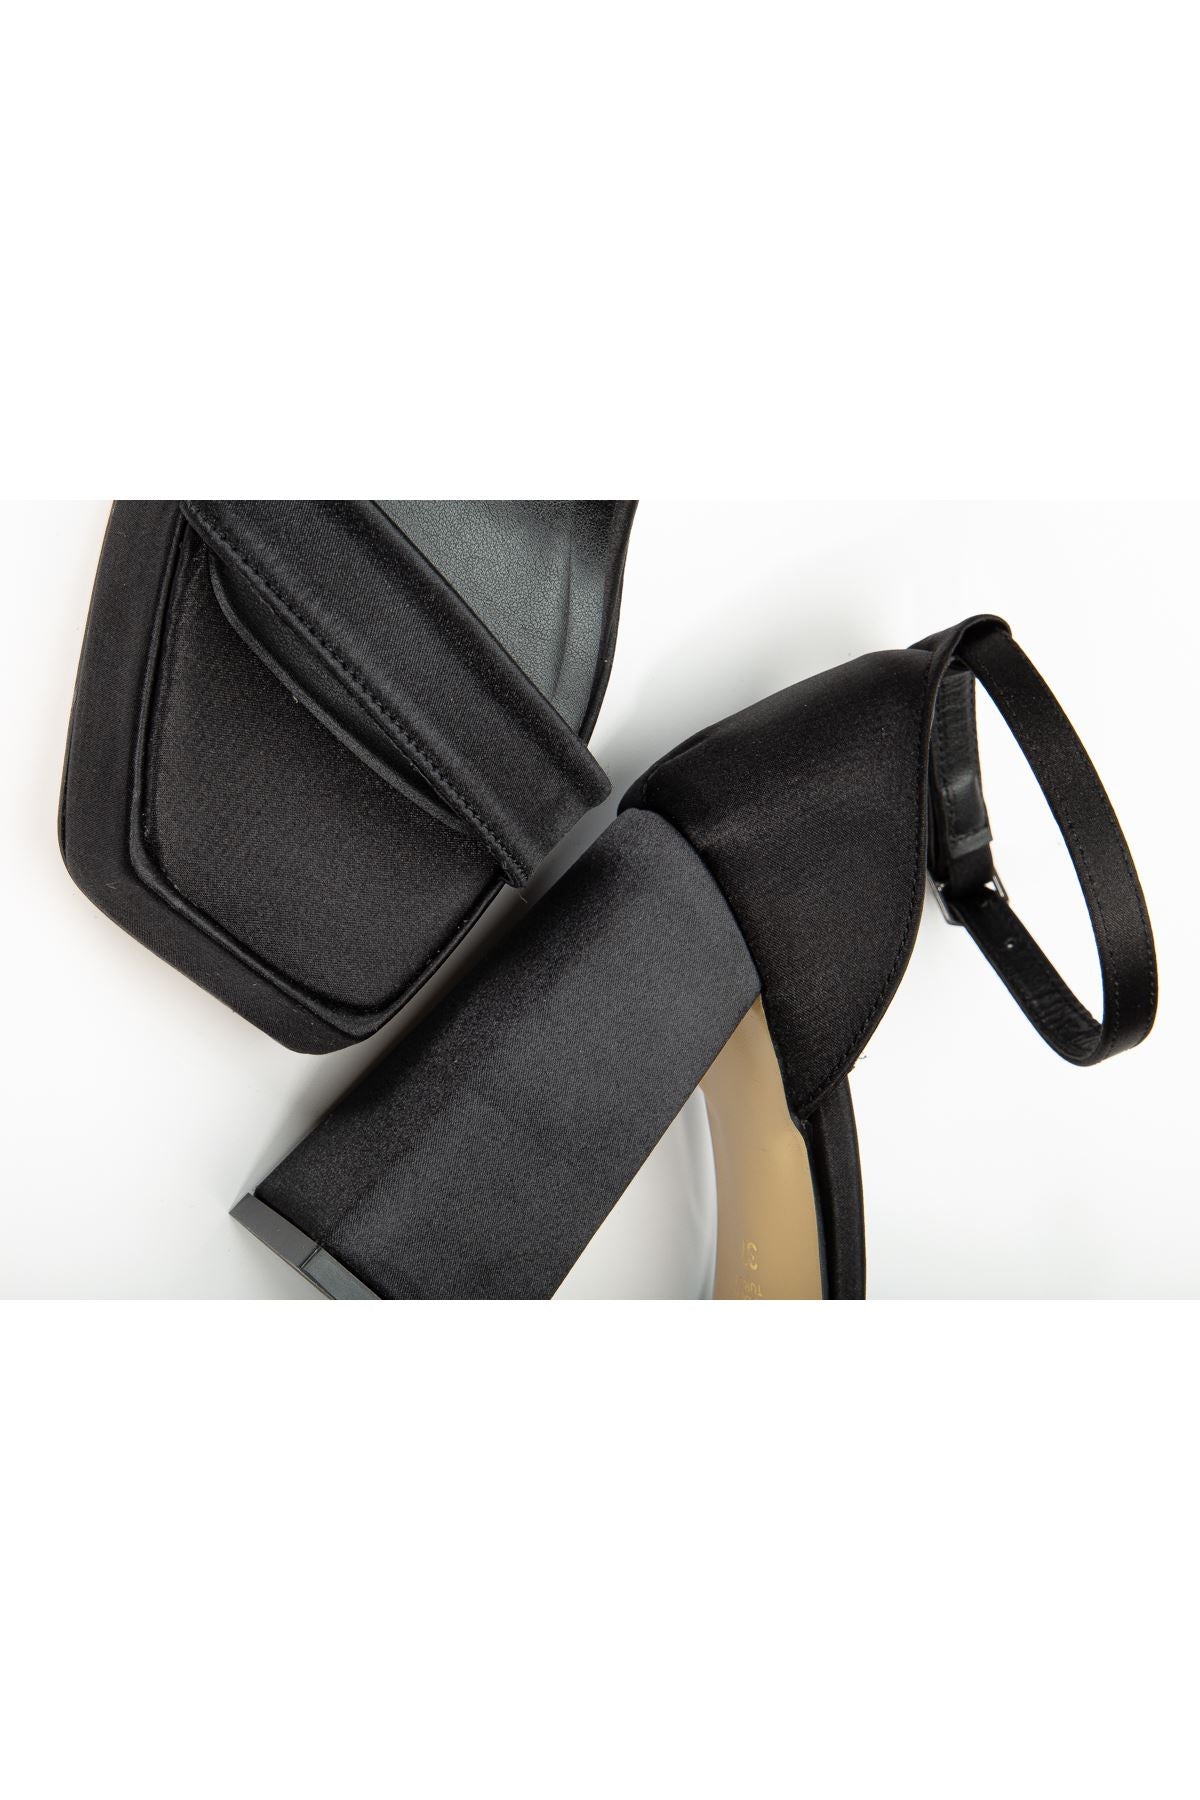 Women's Matilda Black Satin Platform Open Toe Thick Heeled Shoes - STREETMODE™